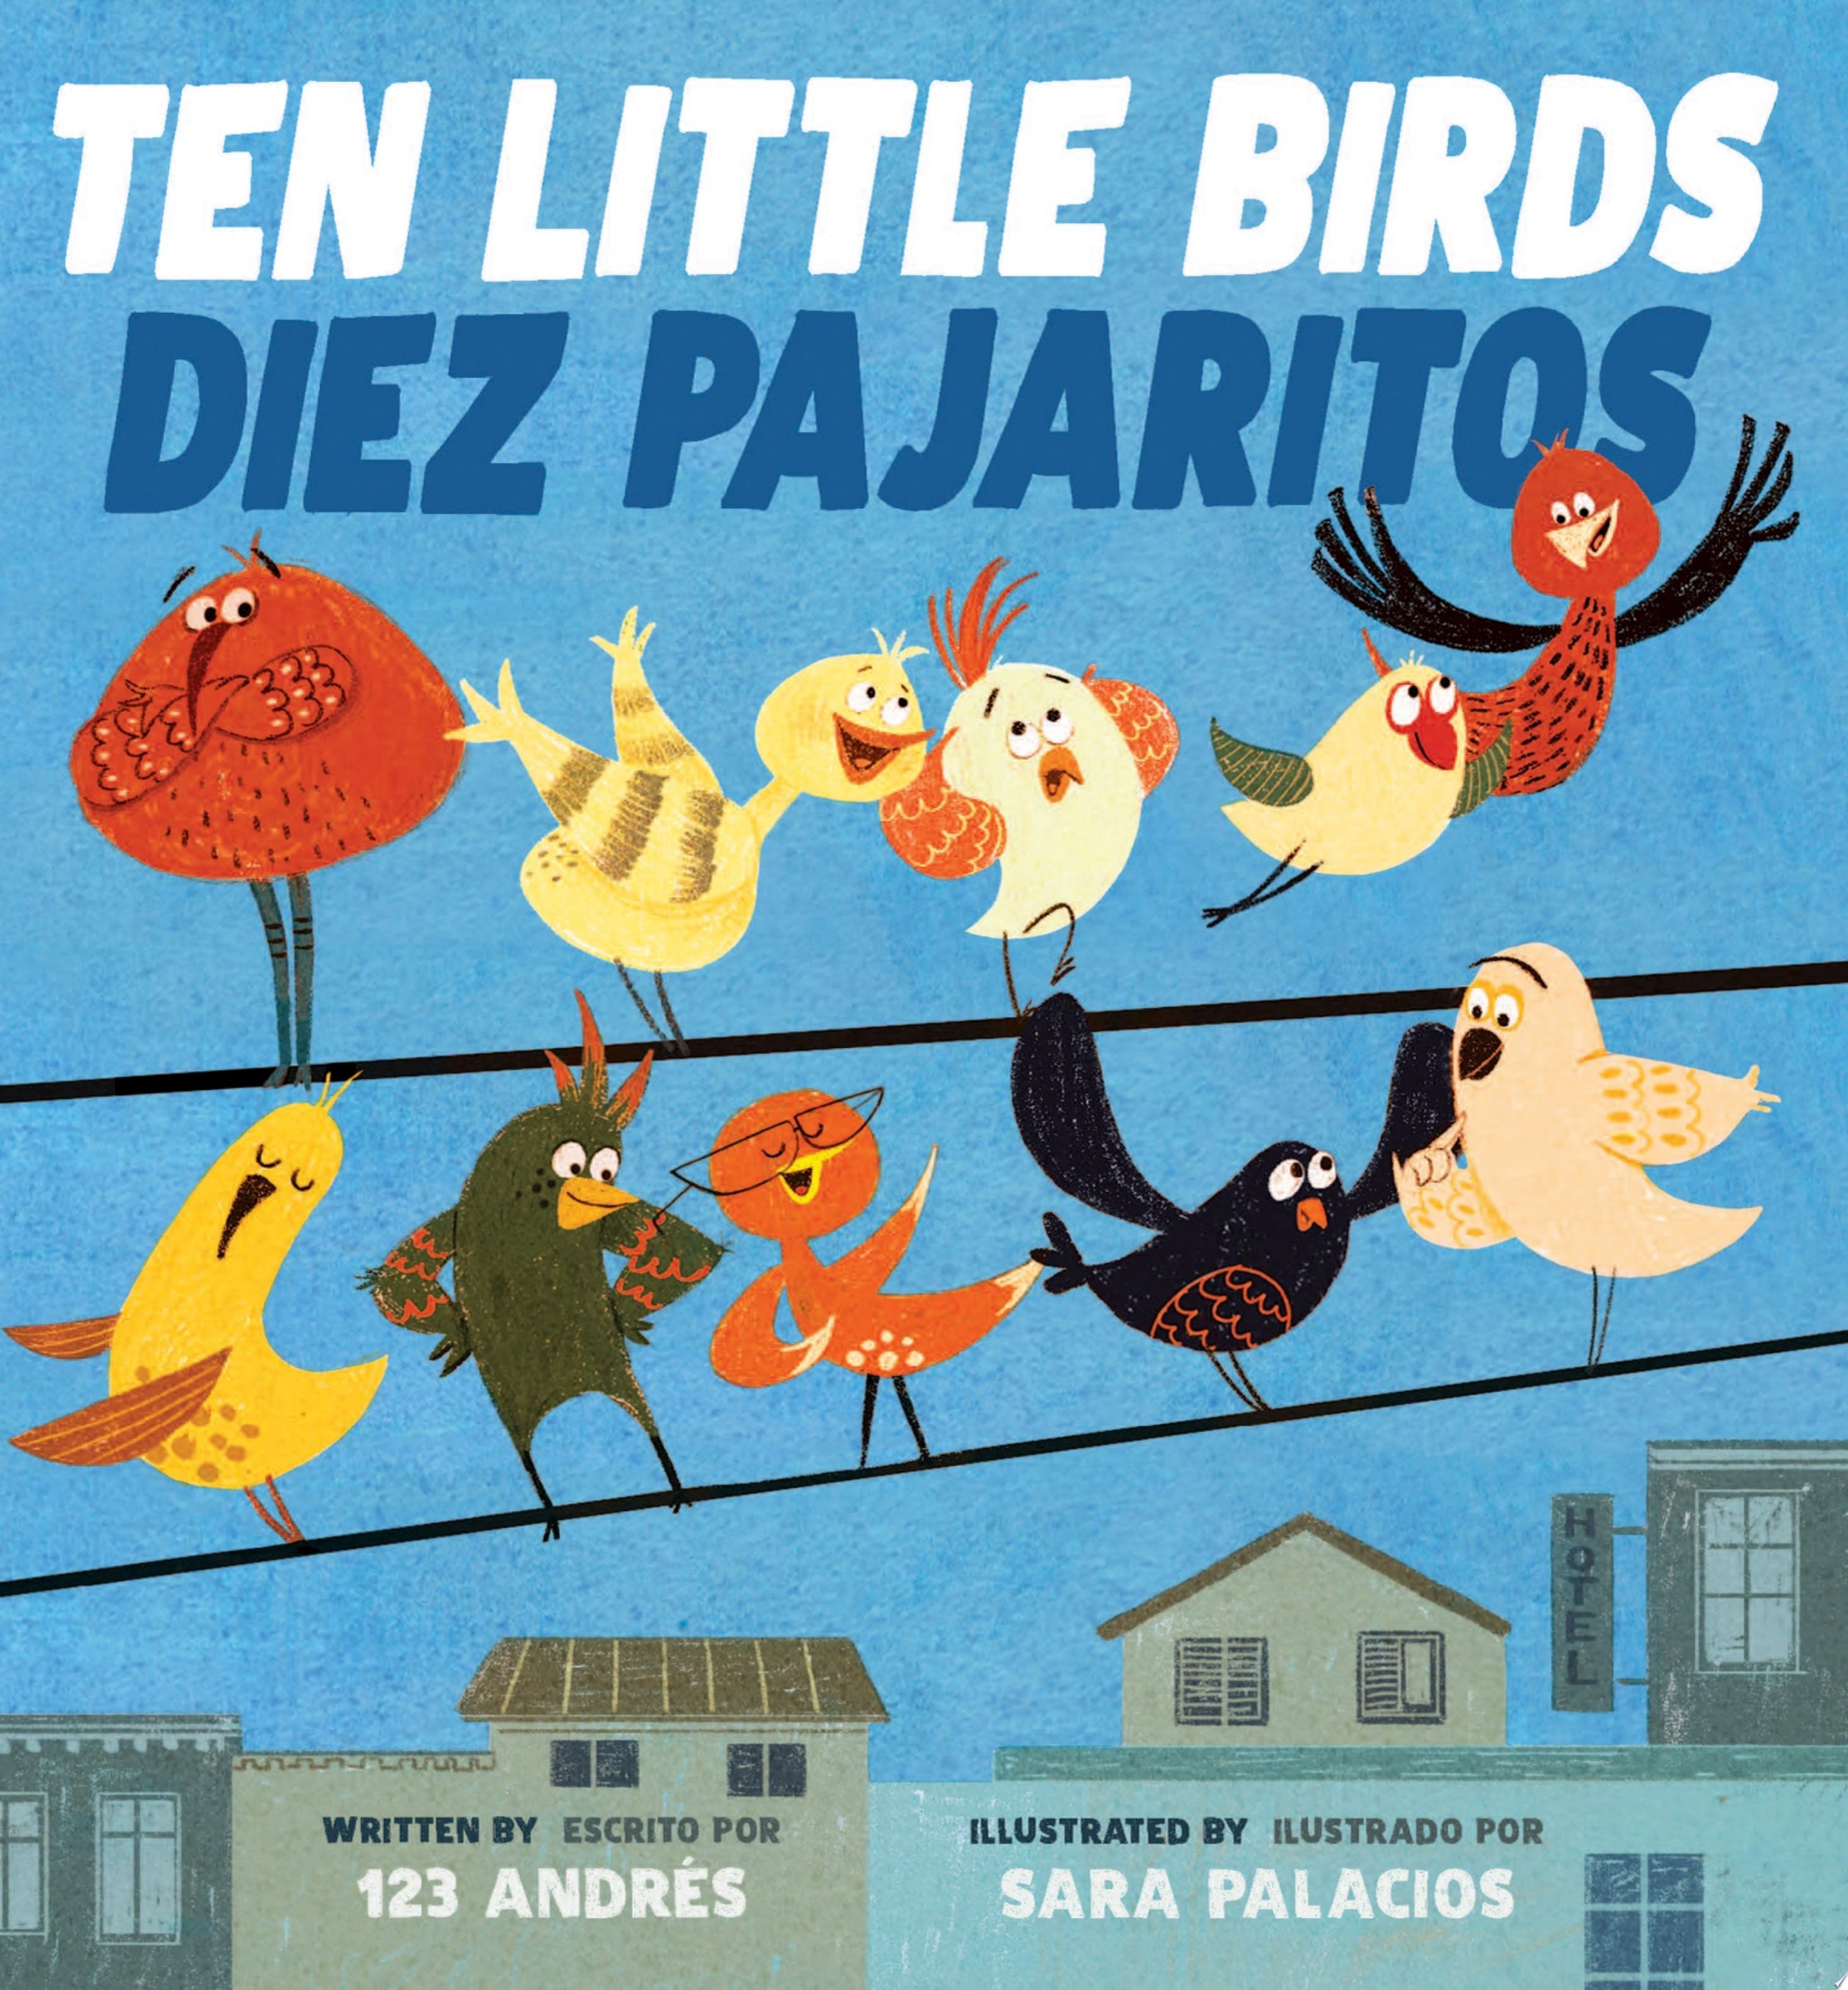 Image for "Ten Little Birds / Diez Pajaritos "